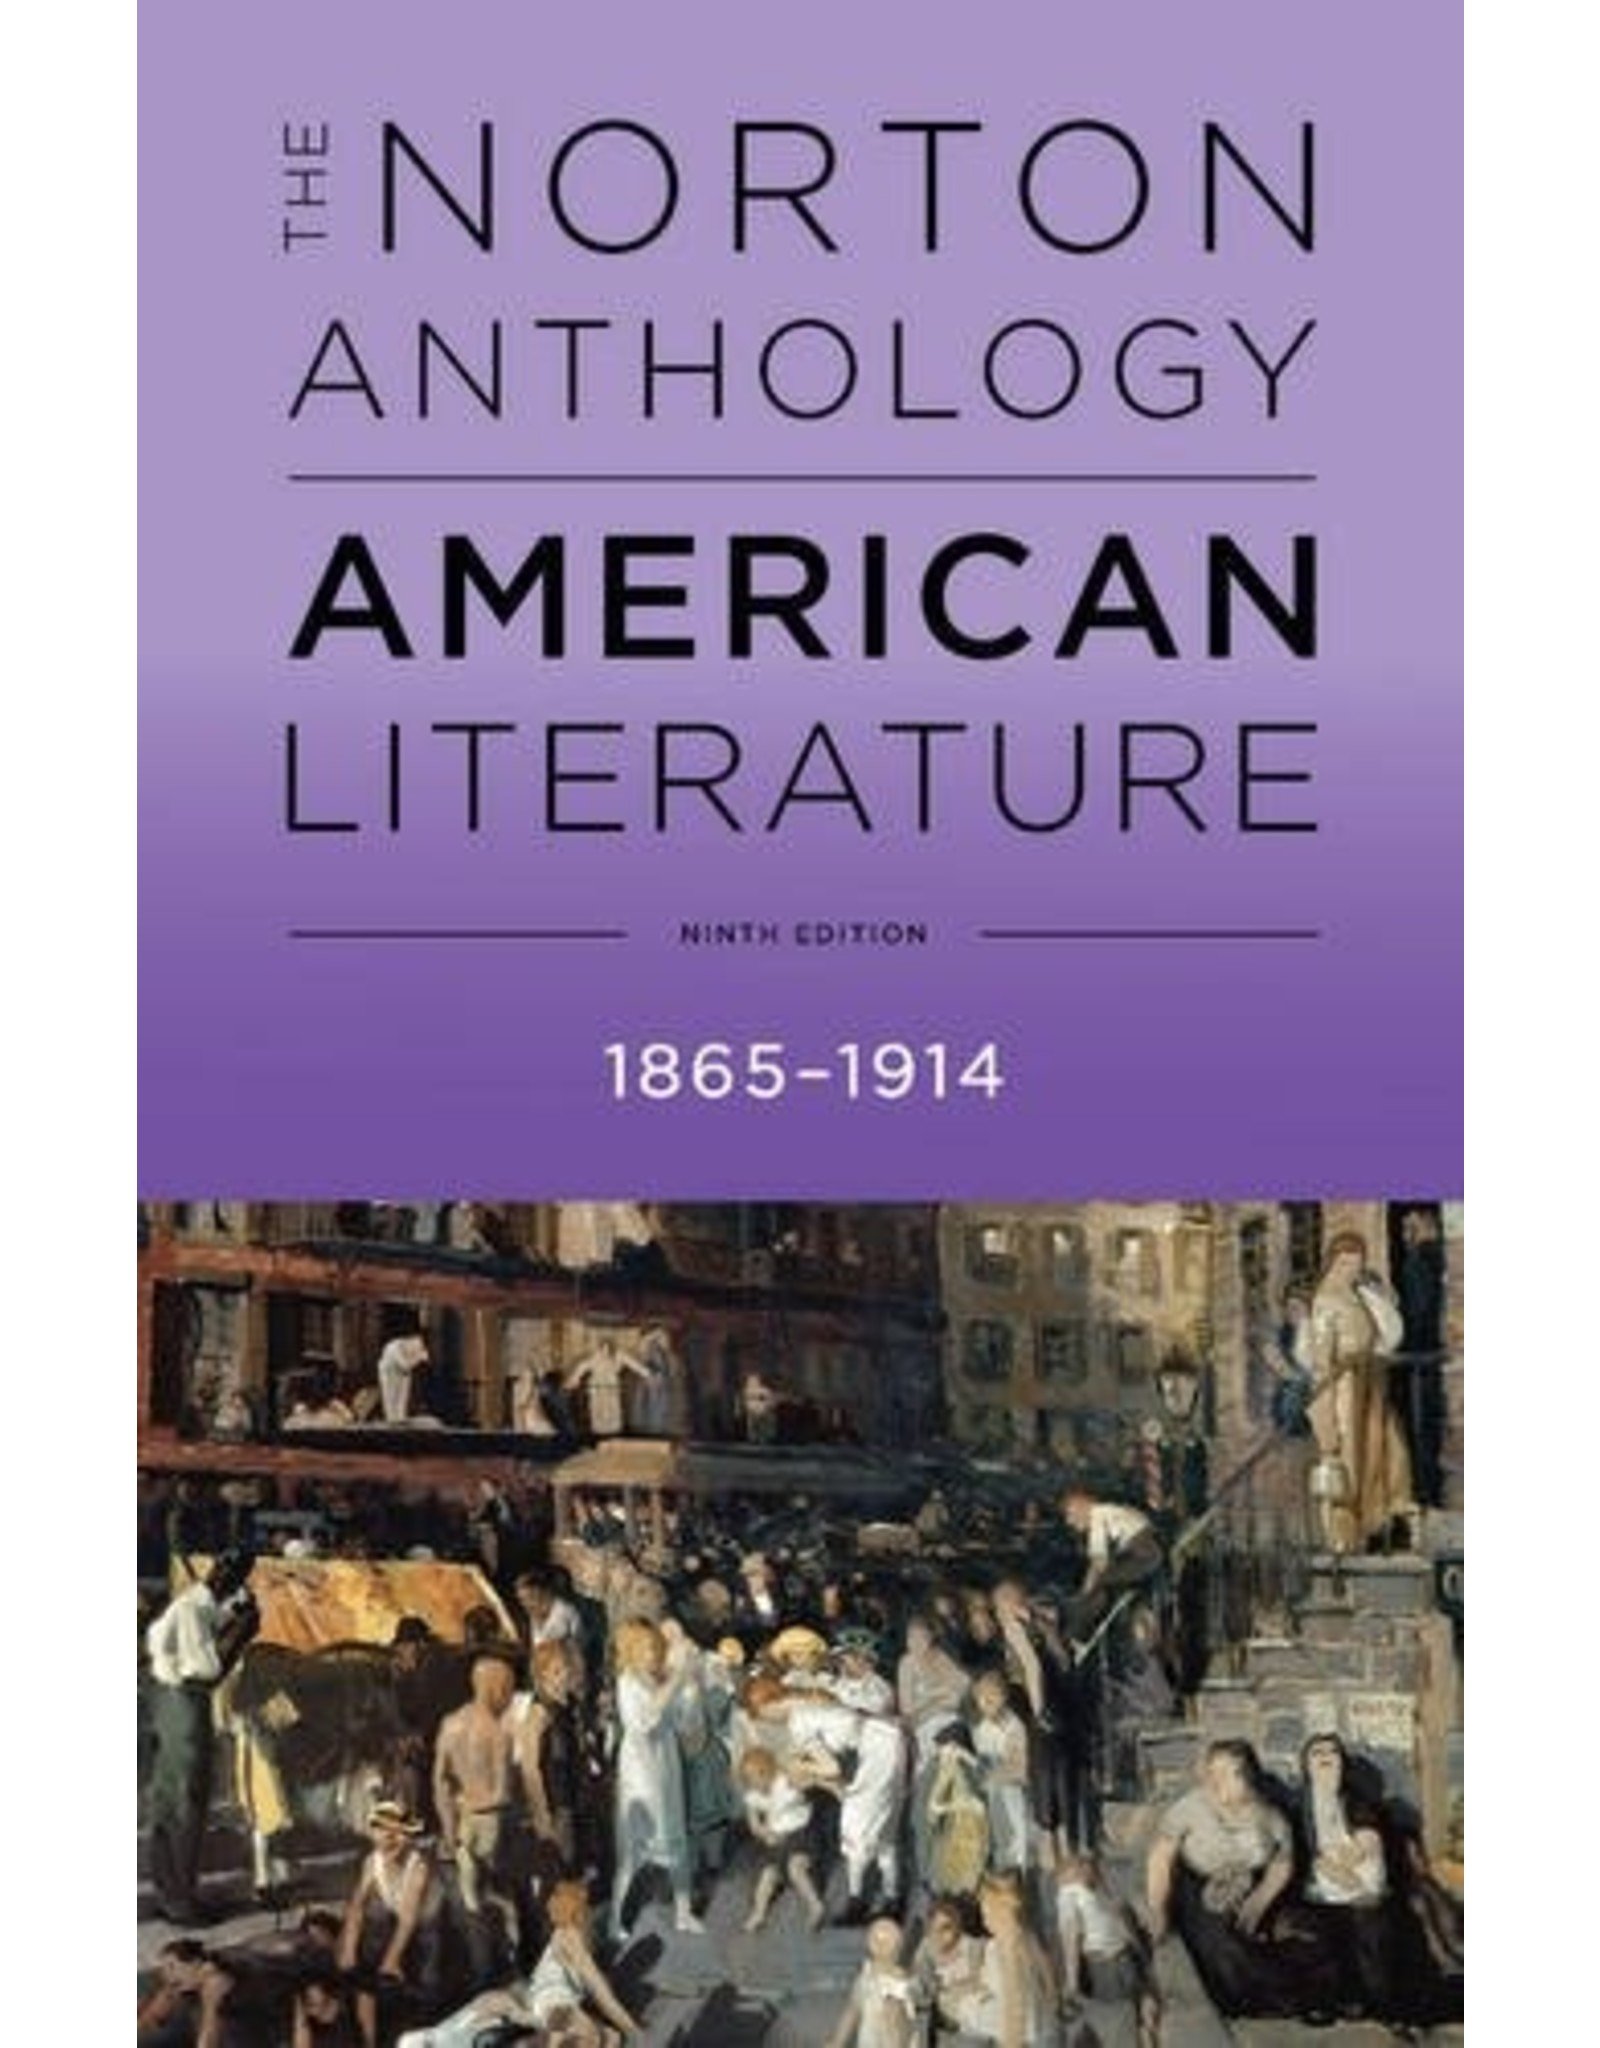 Textbook The Norton Anthology of American Literature: 1865-1914, Volume C